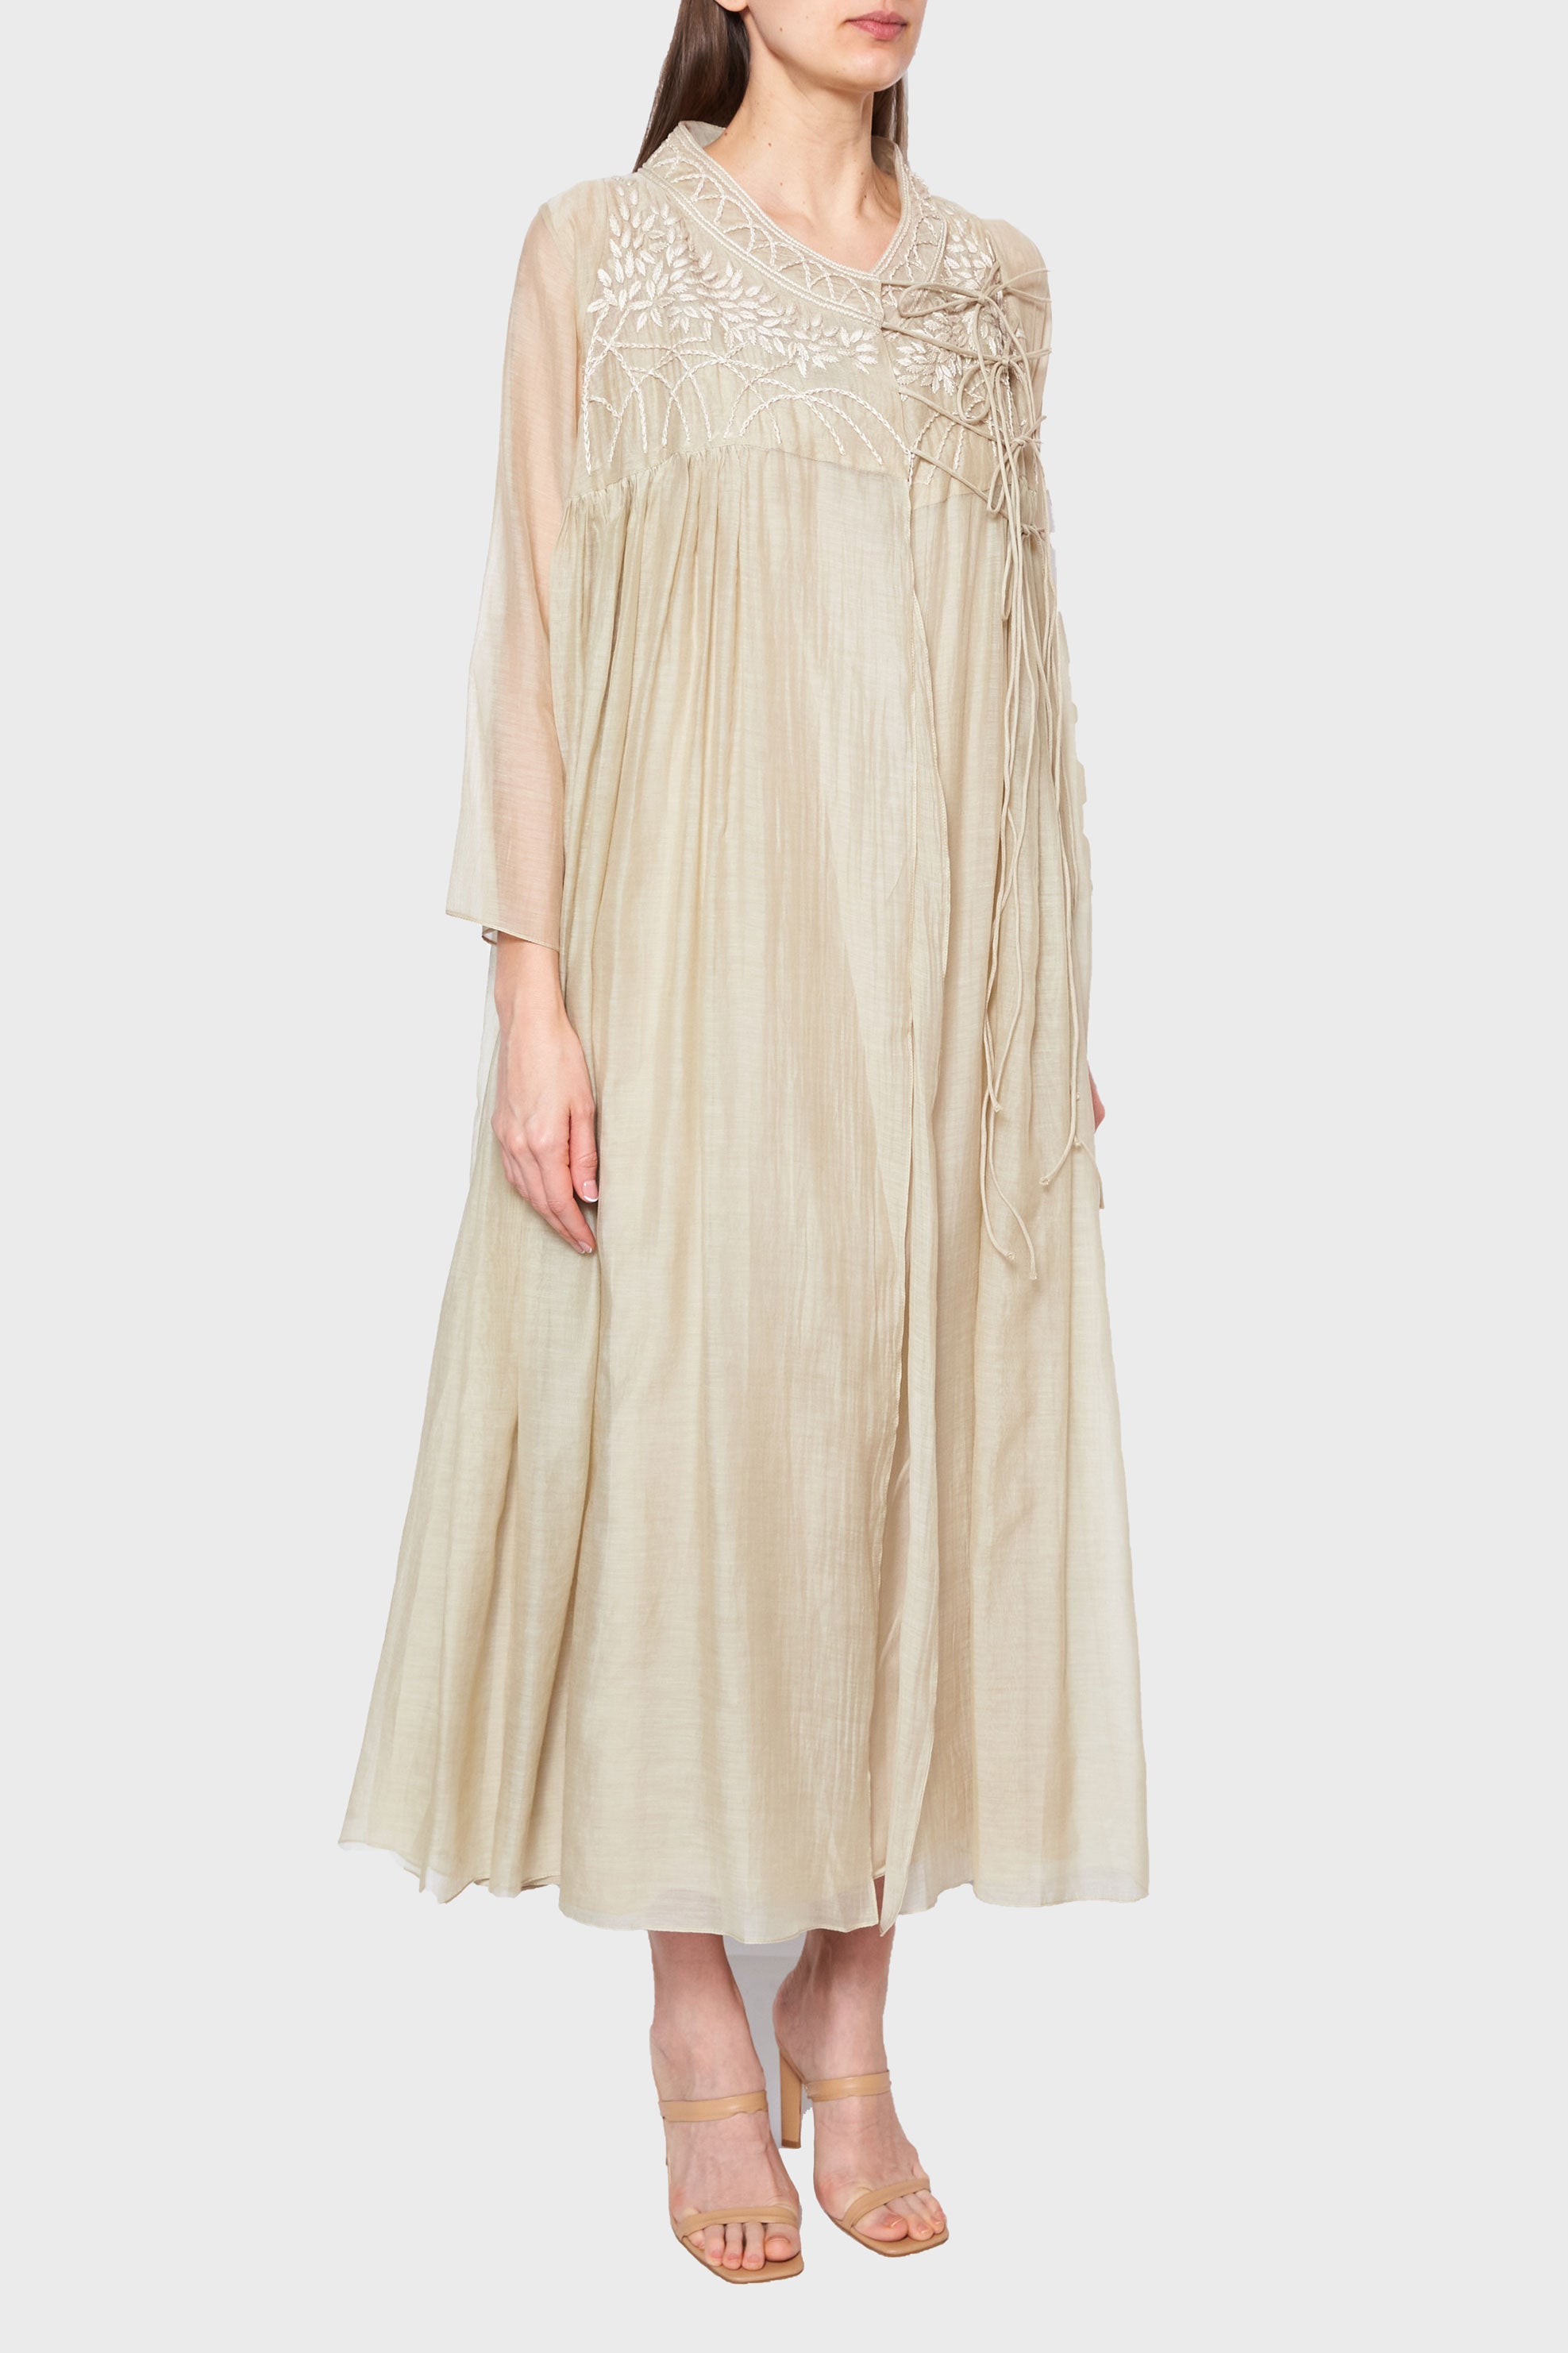 Image of Long Sleeve Asymmetric Dress